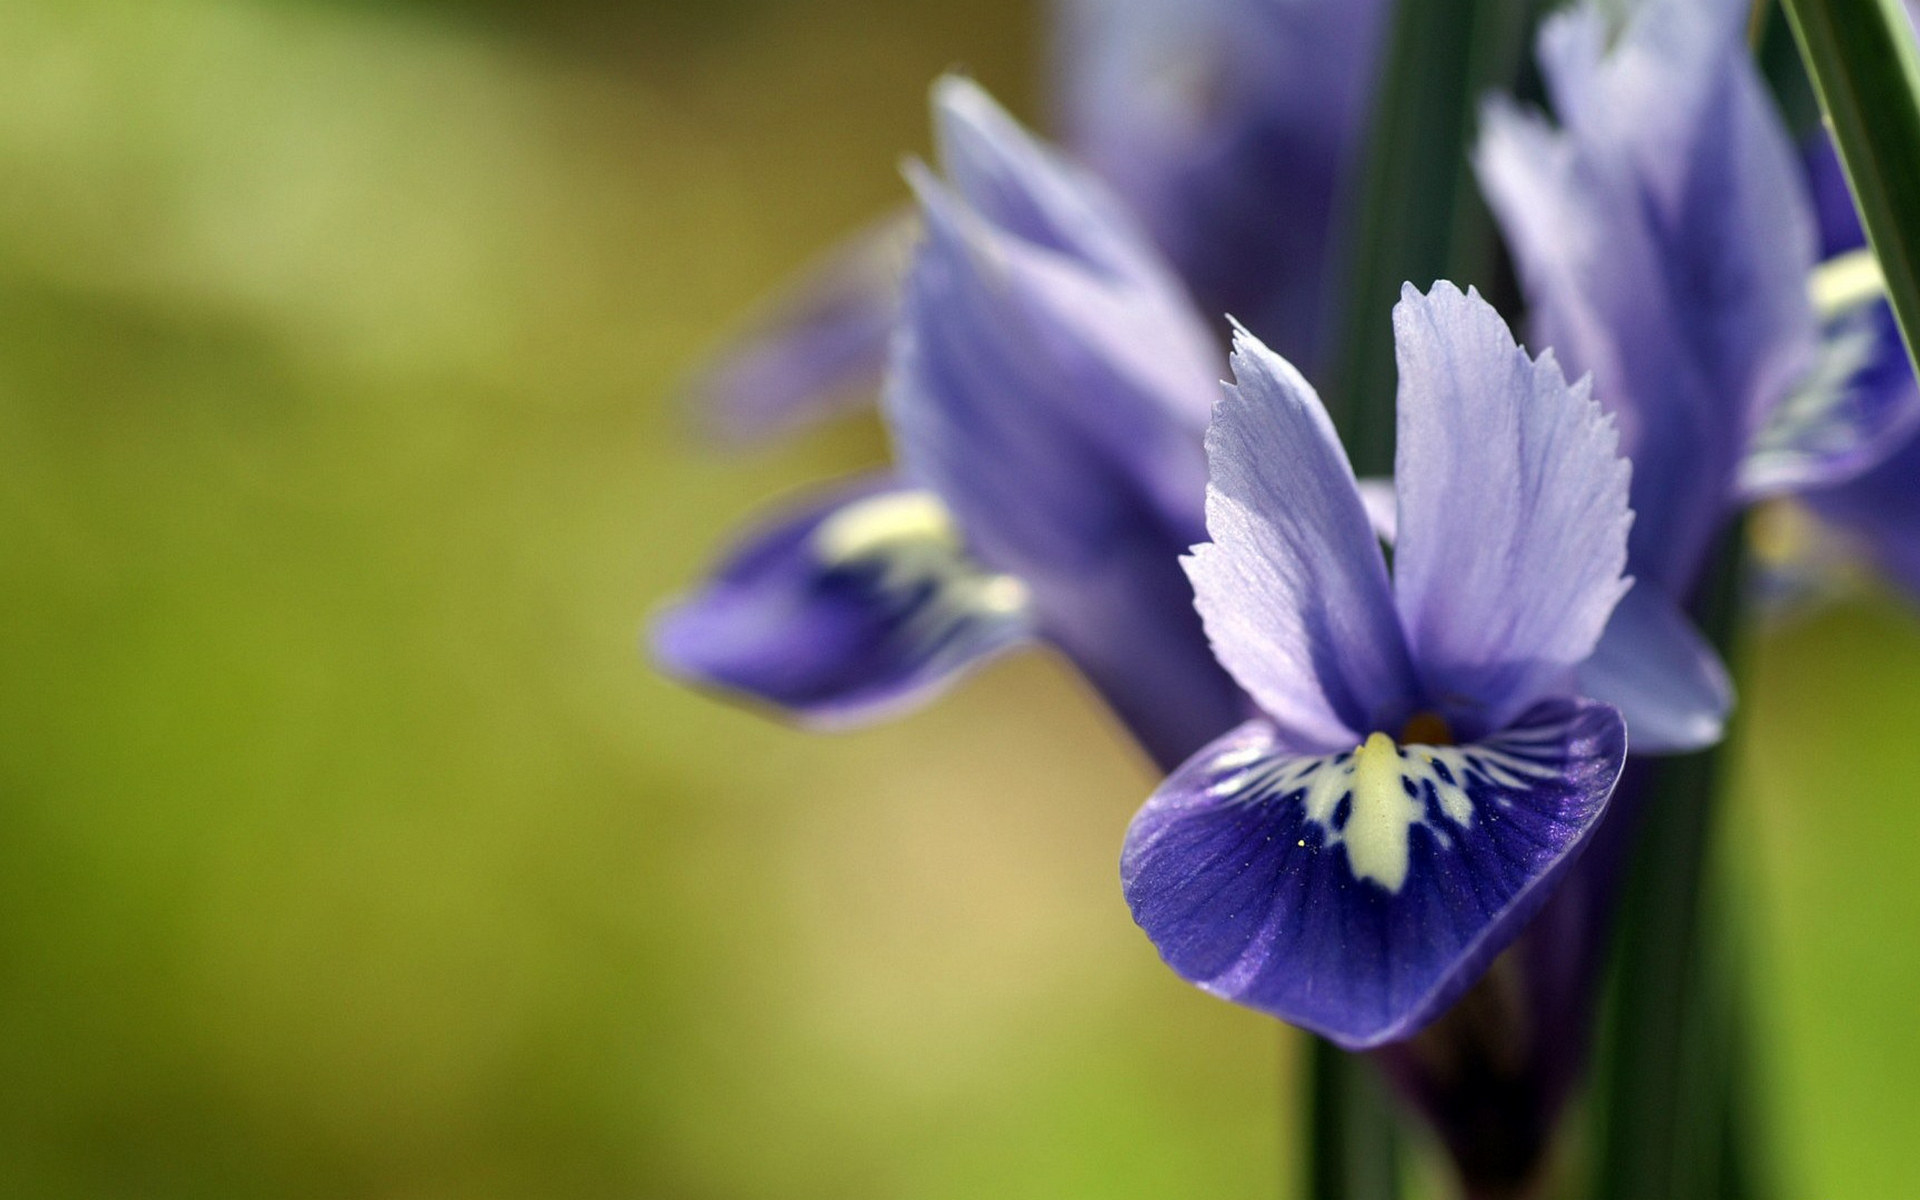 286144 descargar imagen tierra/naturaleza, iris, flor, flores: fondos de pantalla y protectores de pantalla gratis